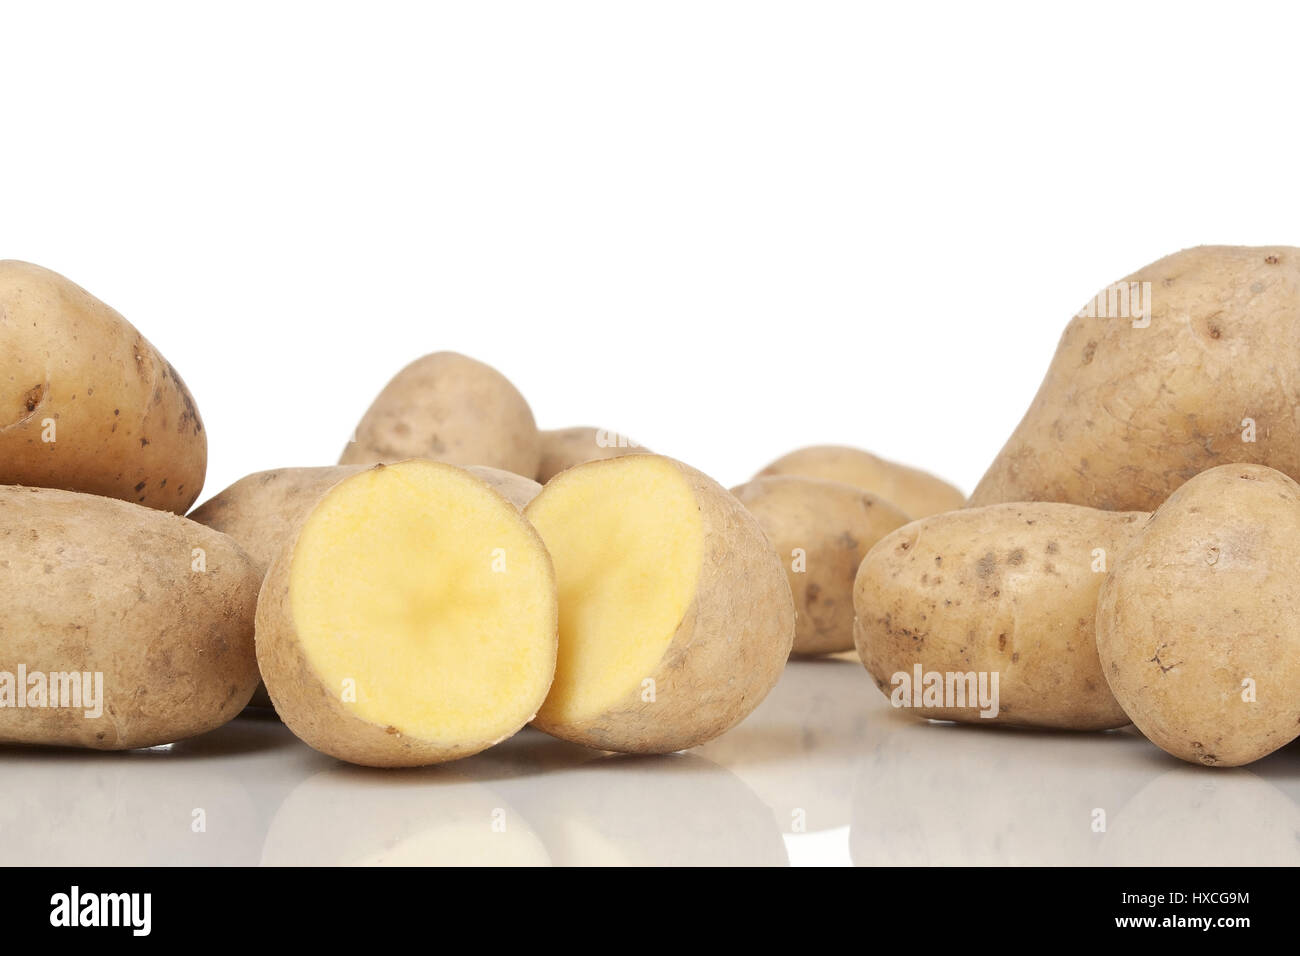 Potatoes, Potatoes |, Kartoffeln |Potatoes| Stock Photo